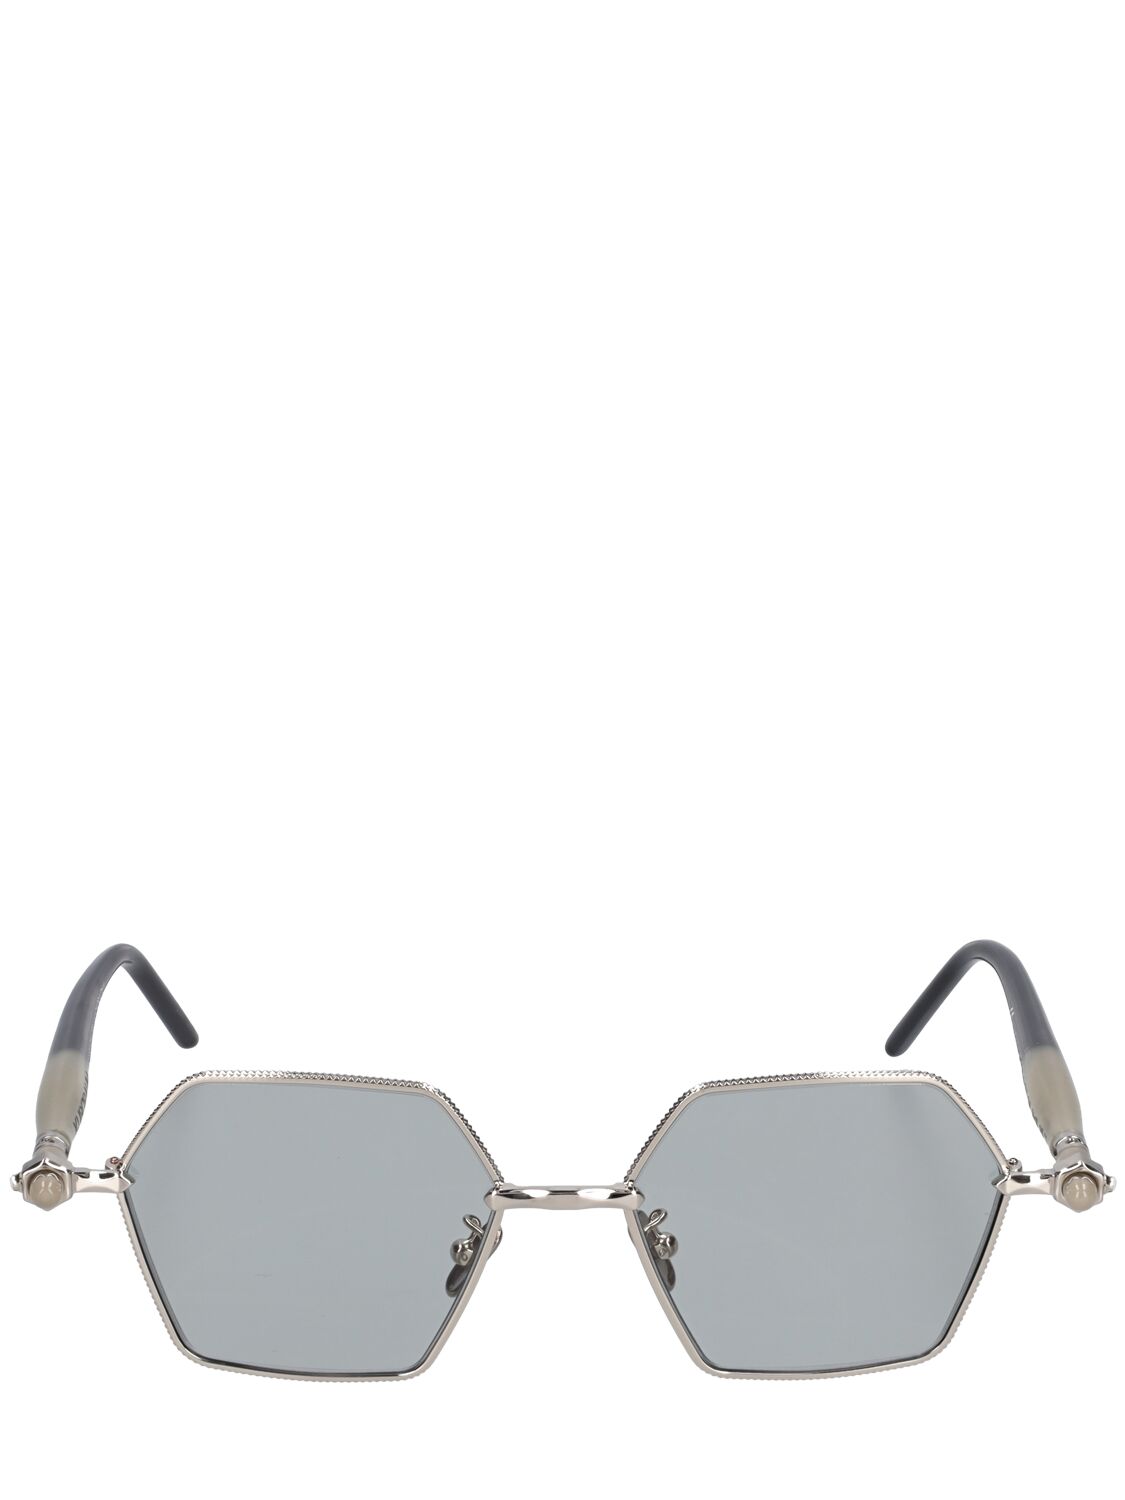 Image of P70 Squared Metal Sunglasses